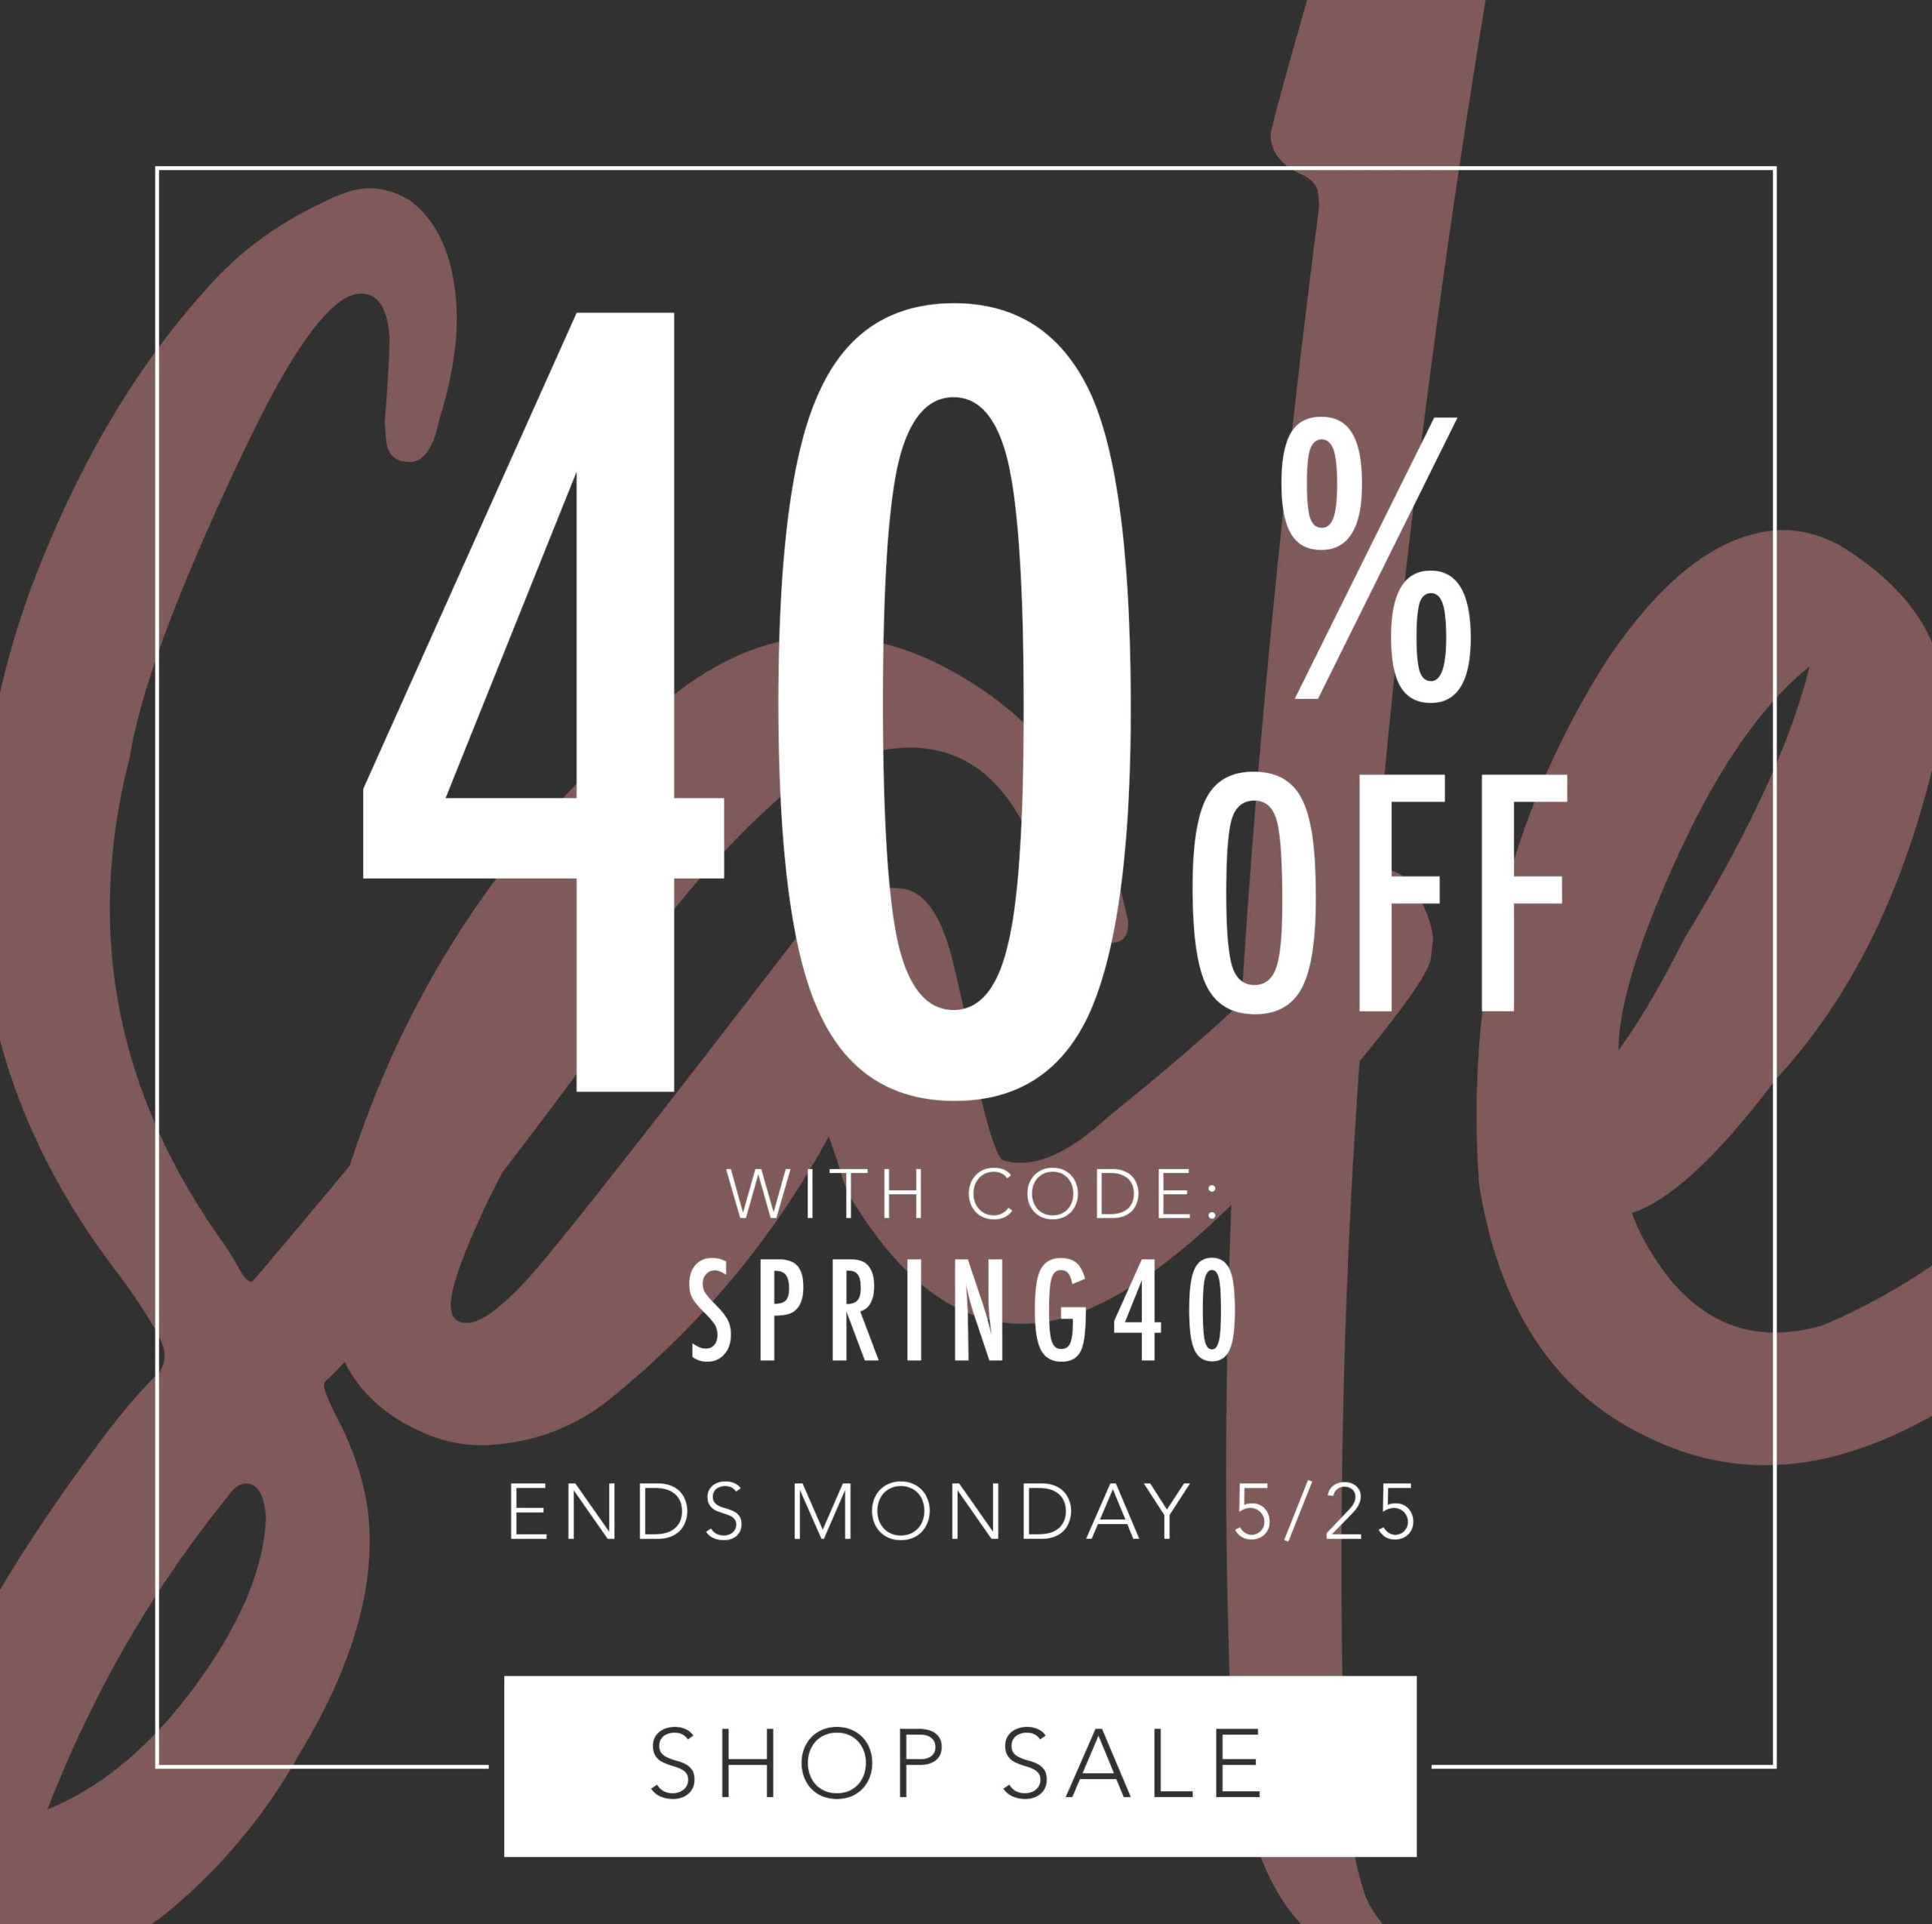 Tadashi Shoji Online - Spring Sale is Here - SHOP 40% OFF